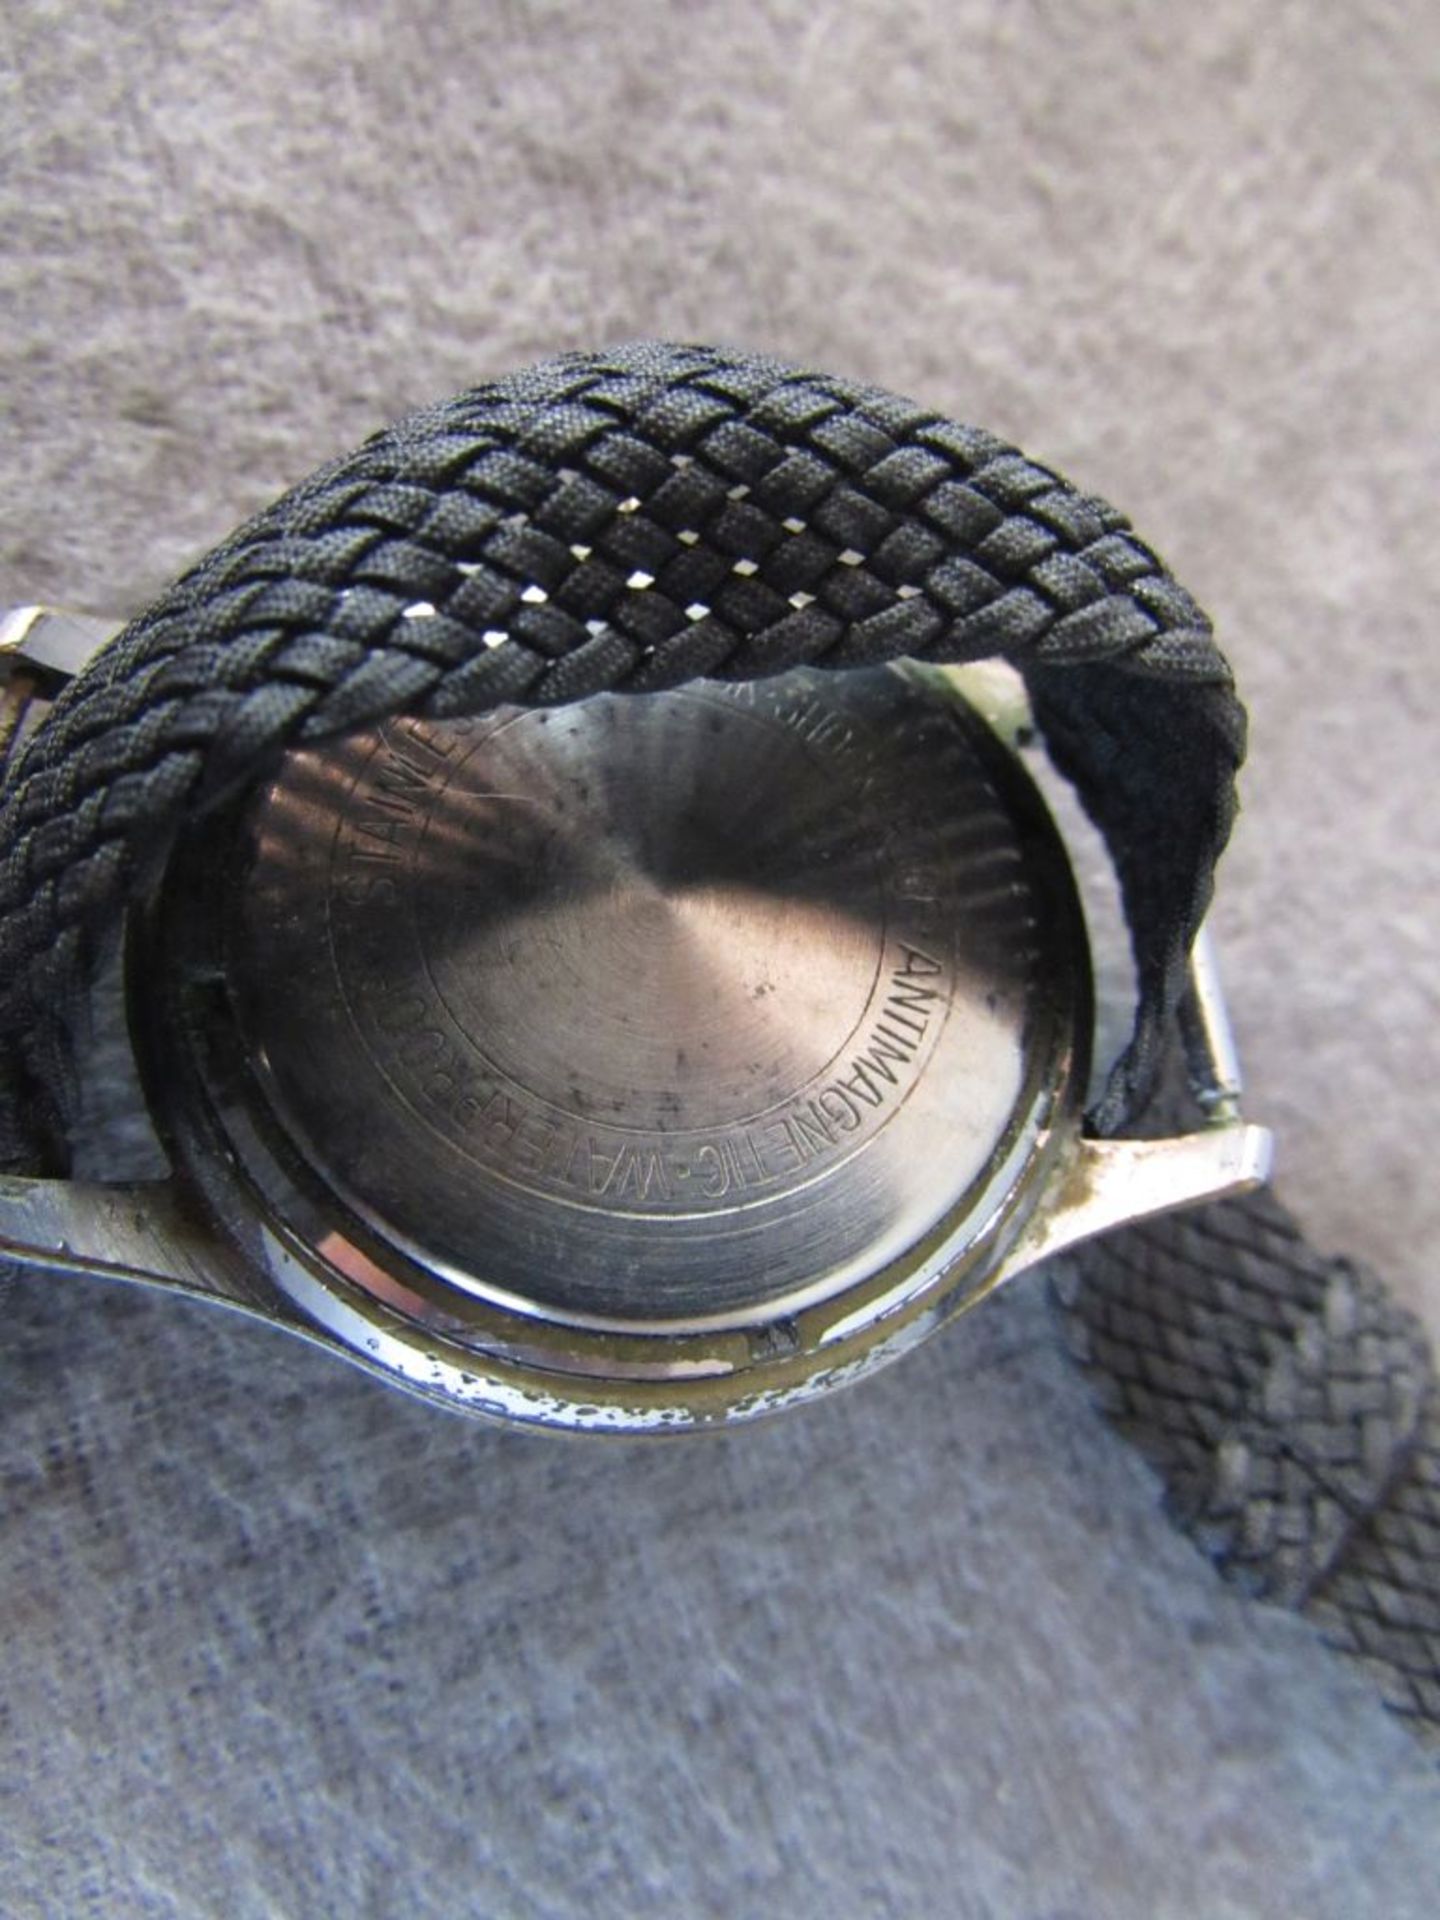 Art Deco Armbanduhr Hersteller Anker mechanisch läuft an mit original Band - Bild 4 aus 5